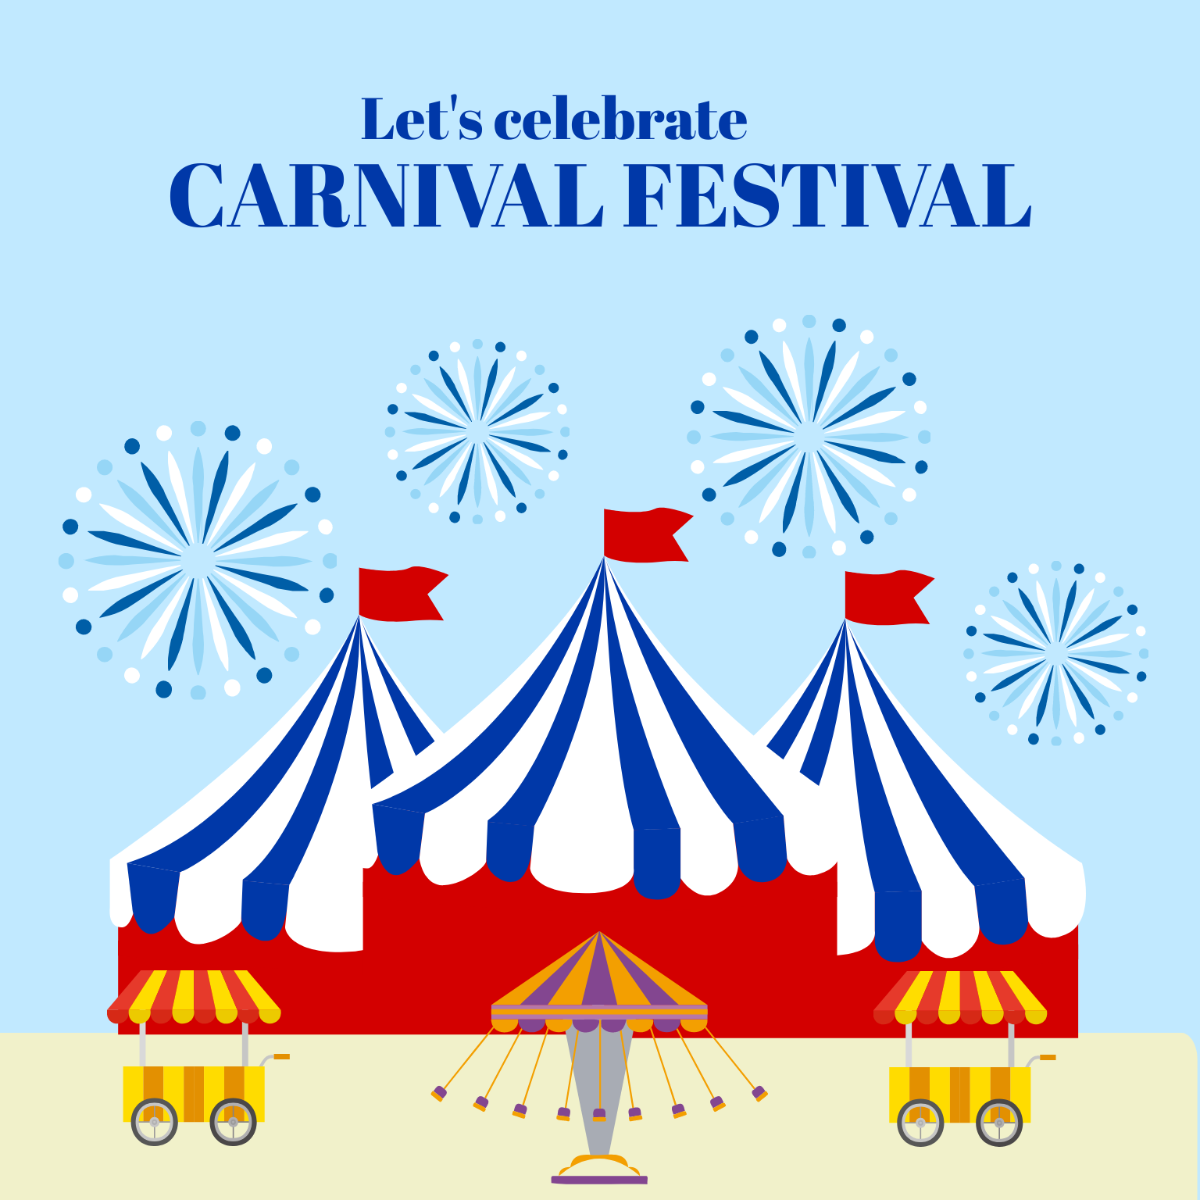 Free Carnival Festival Celebration Vector Template